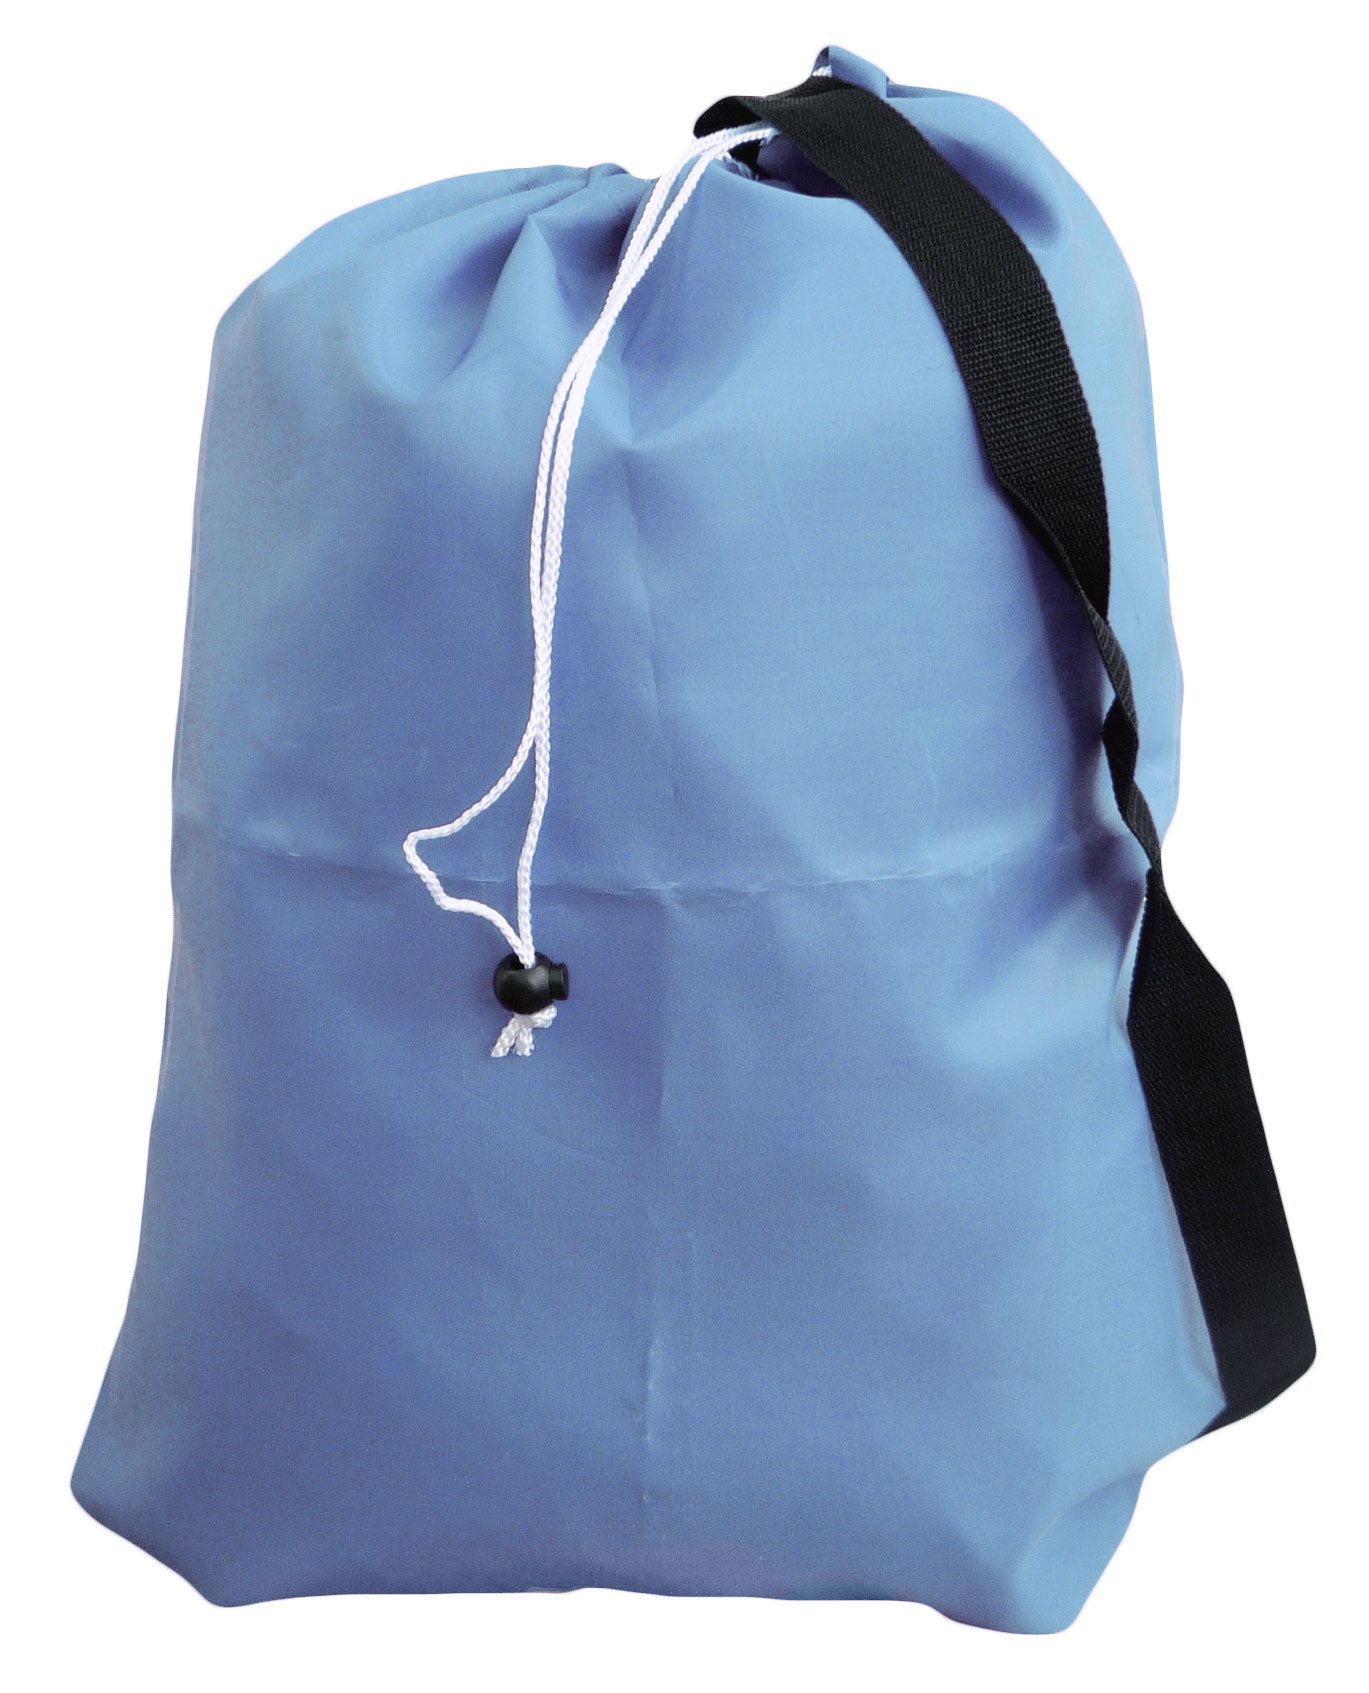 Laundry Bag with Strap, Drawstring, Locking Closure, Size: Medium 24x36